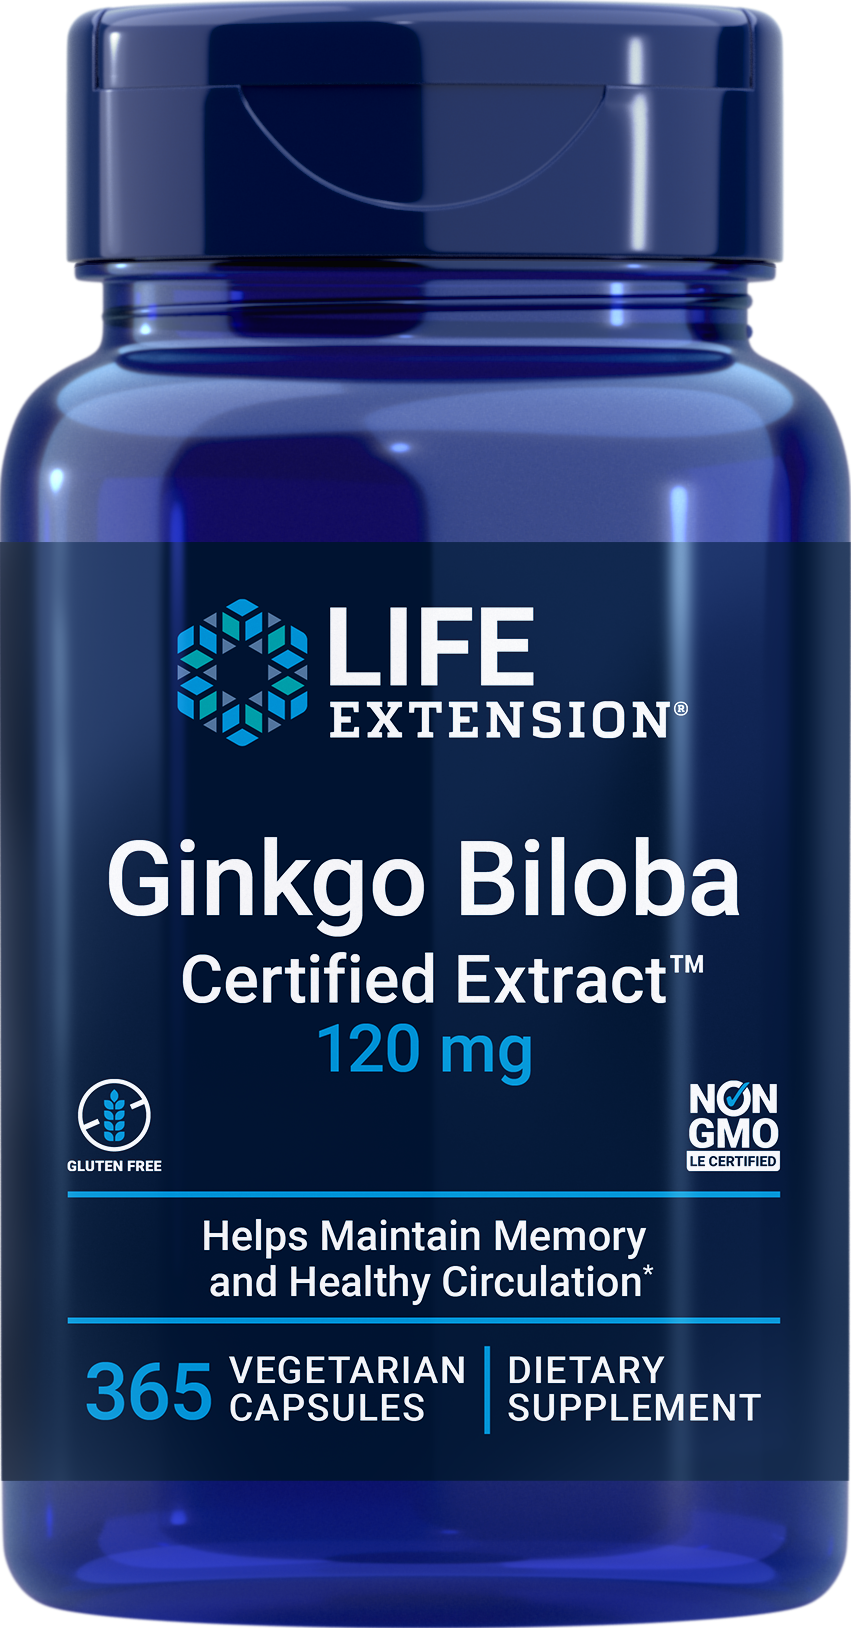 Ginkgo Biloba Certified Extract™